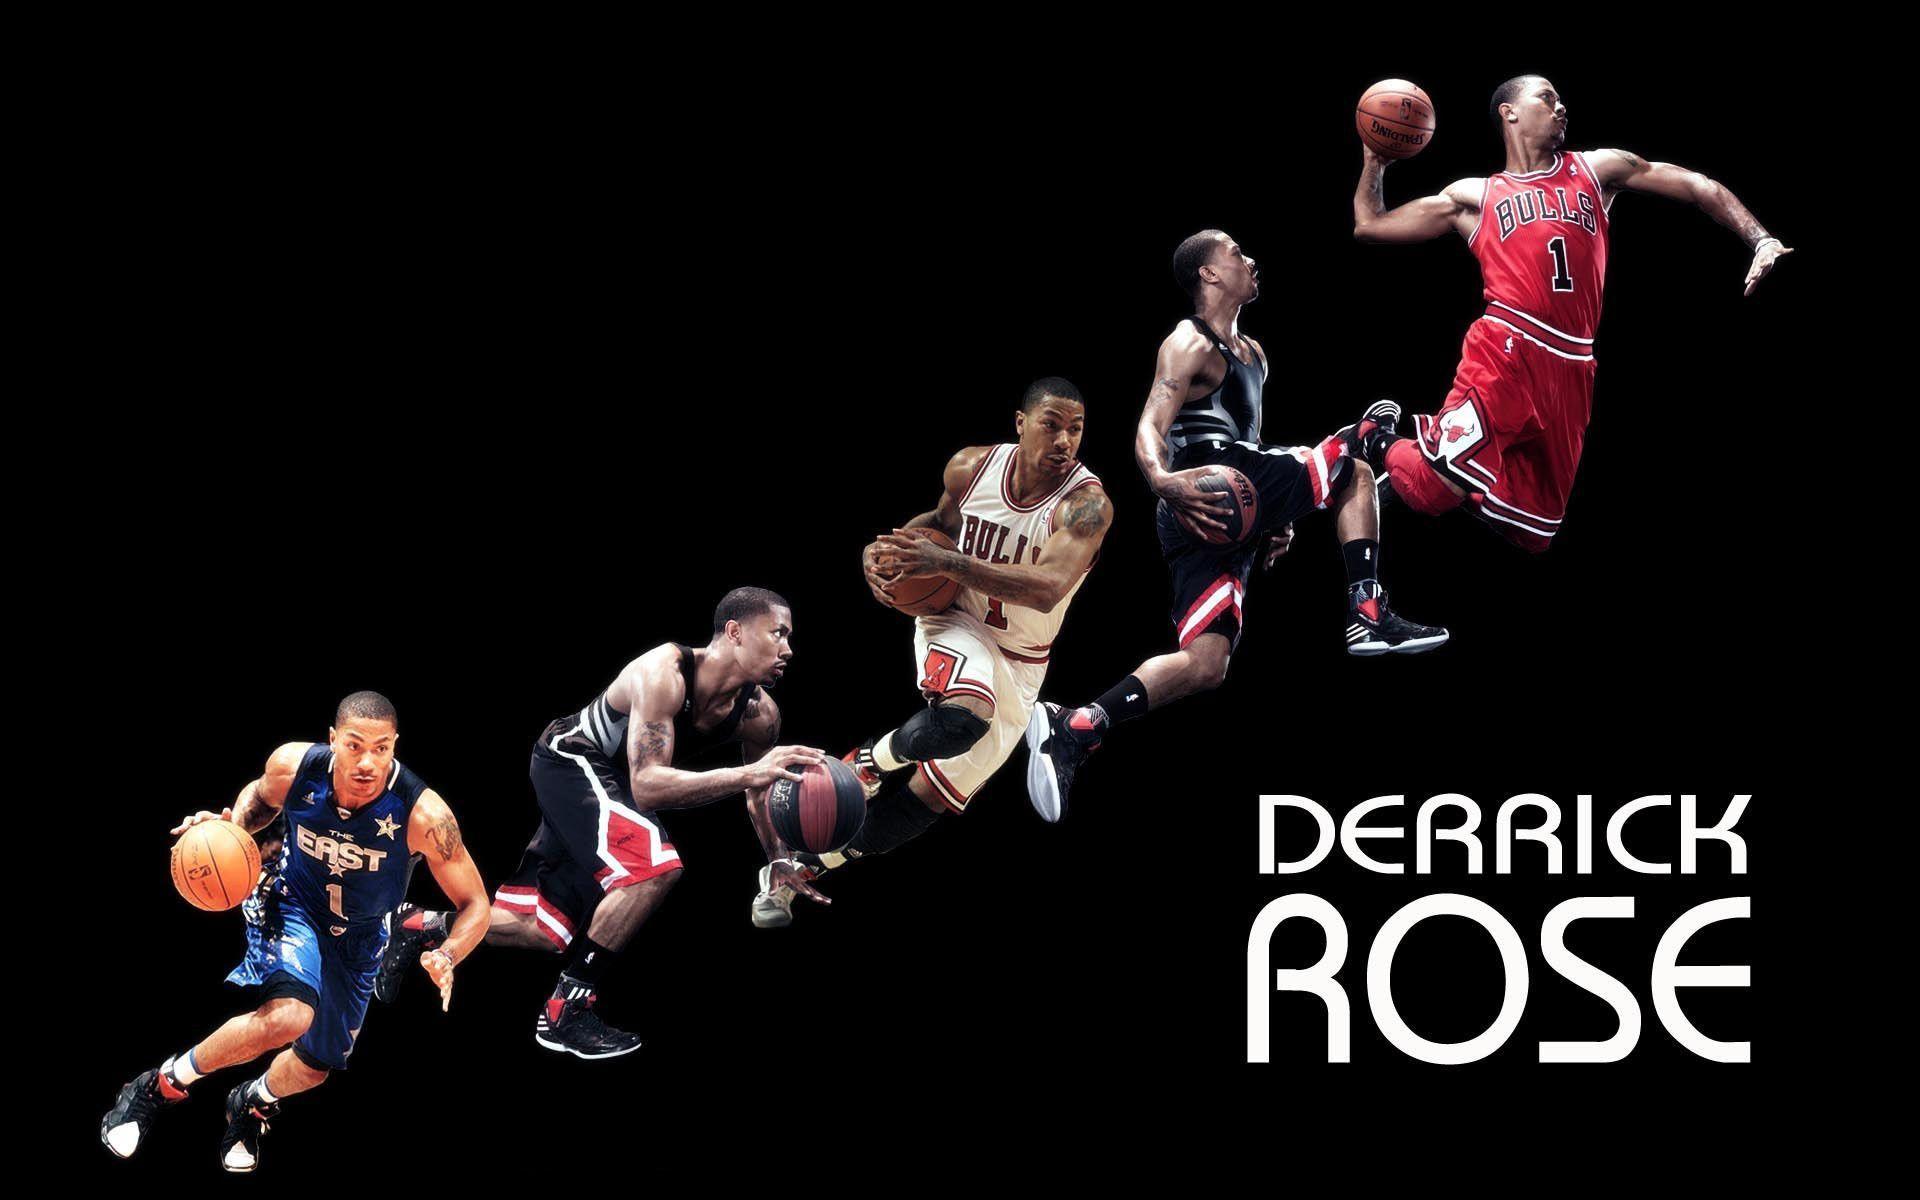 Derrick Rose Slam Dunk Wallpapers Wide or HD